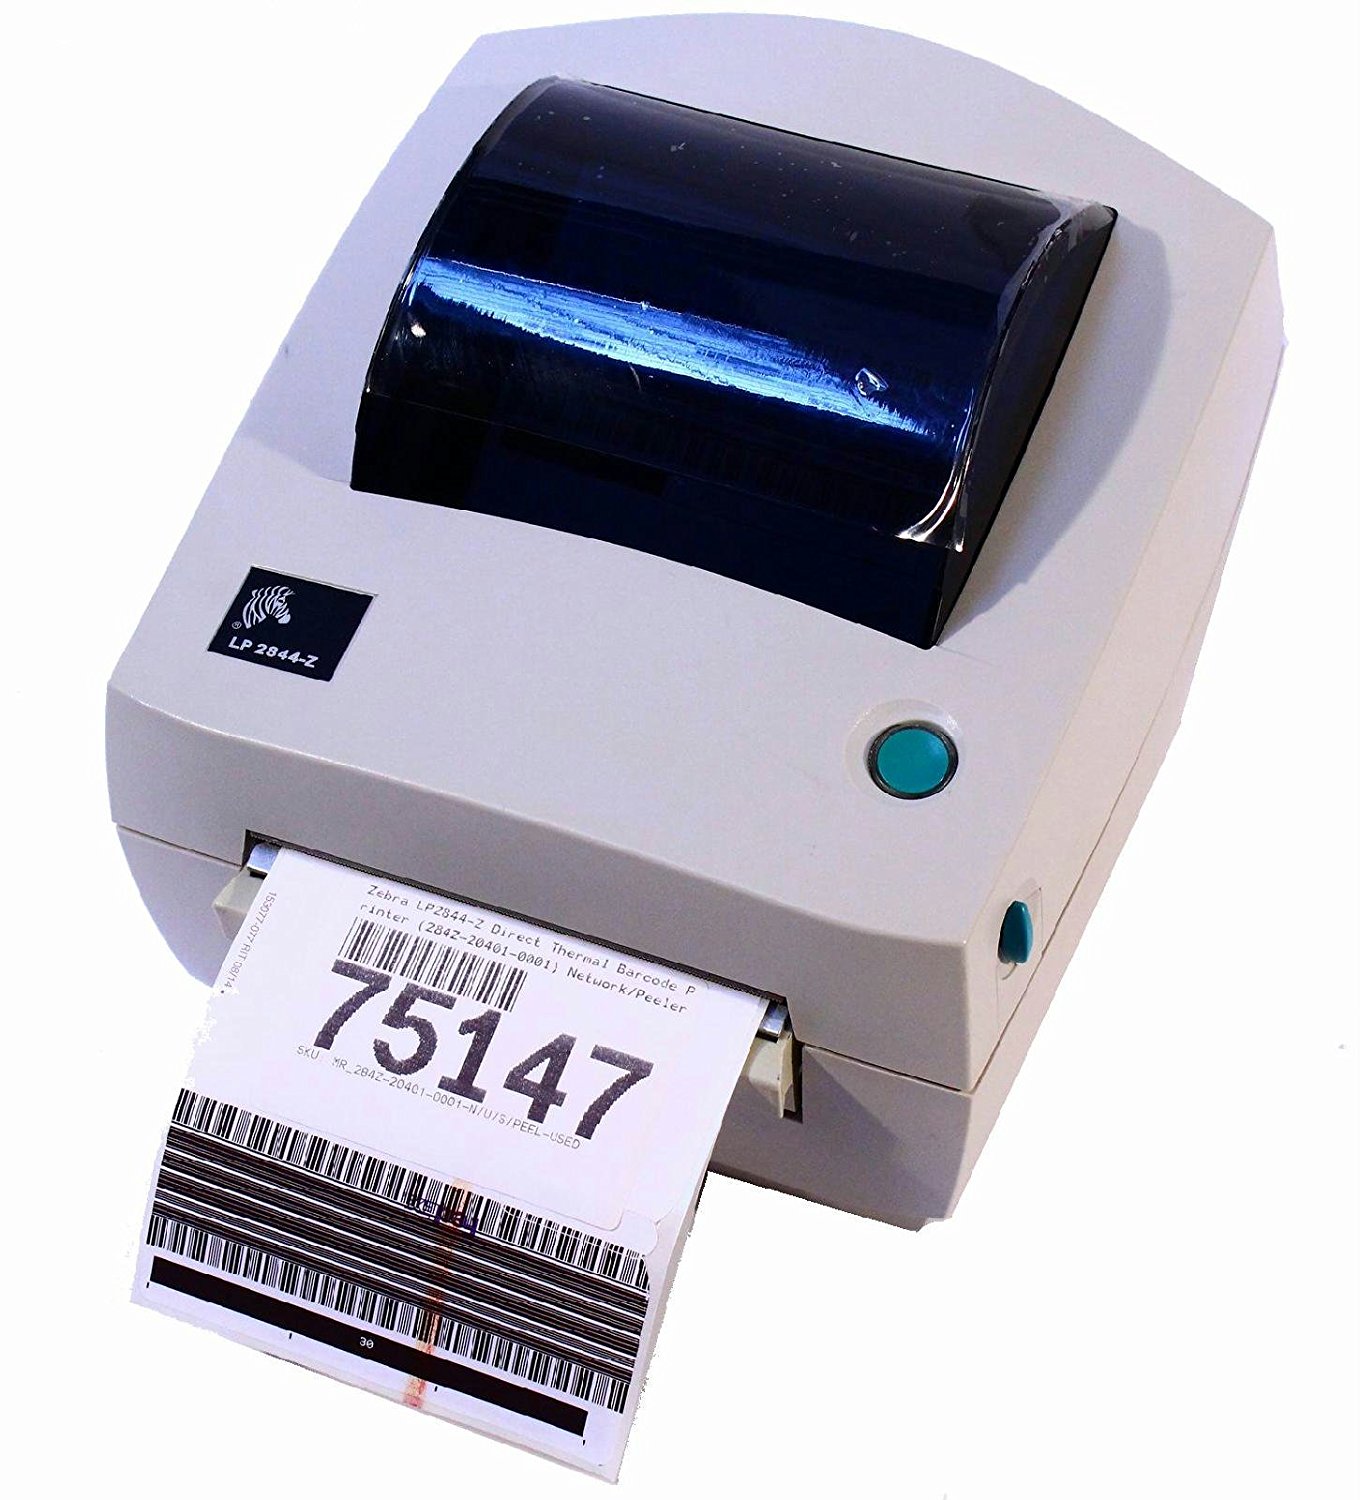 Zebra Lp2844 Z Direct Thermal Barcode Printer 284z 20401 0001 Networkusbserialpeeler 203dpi 2370